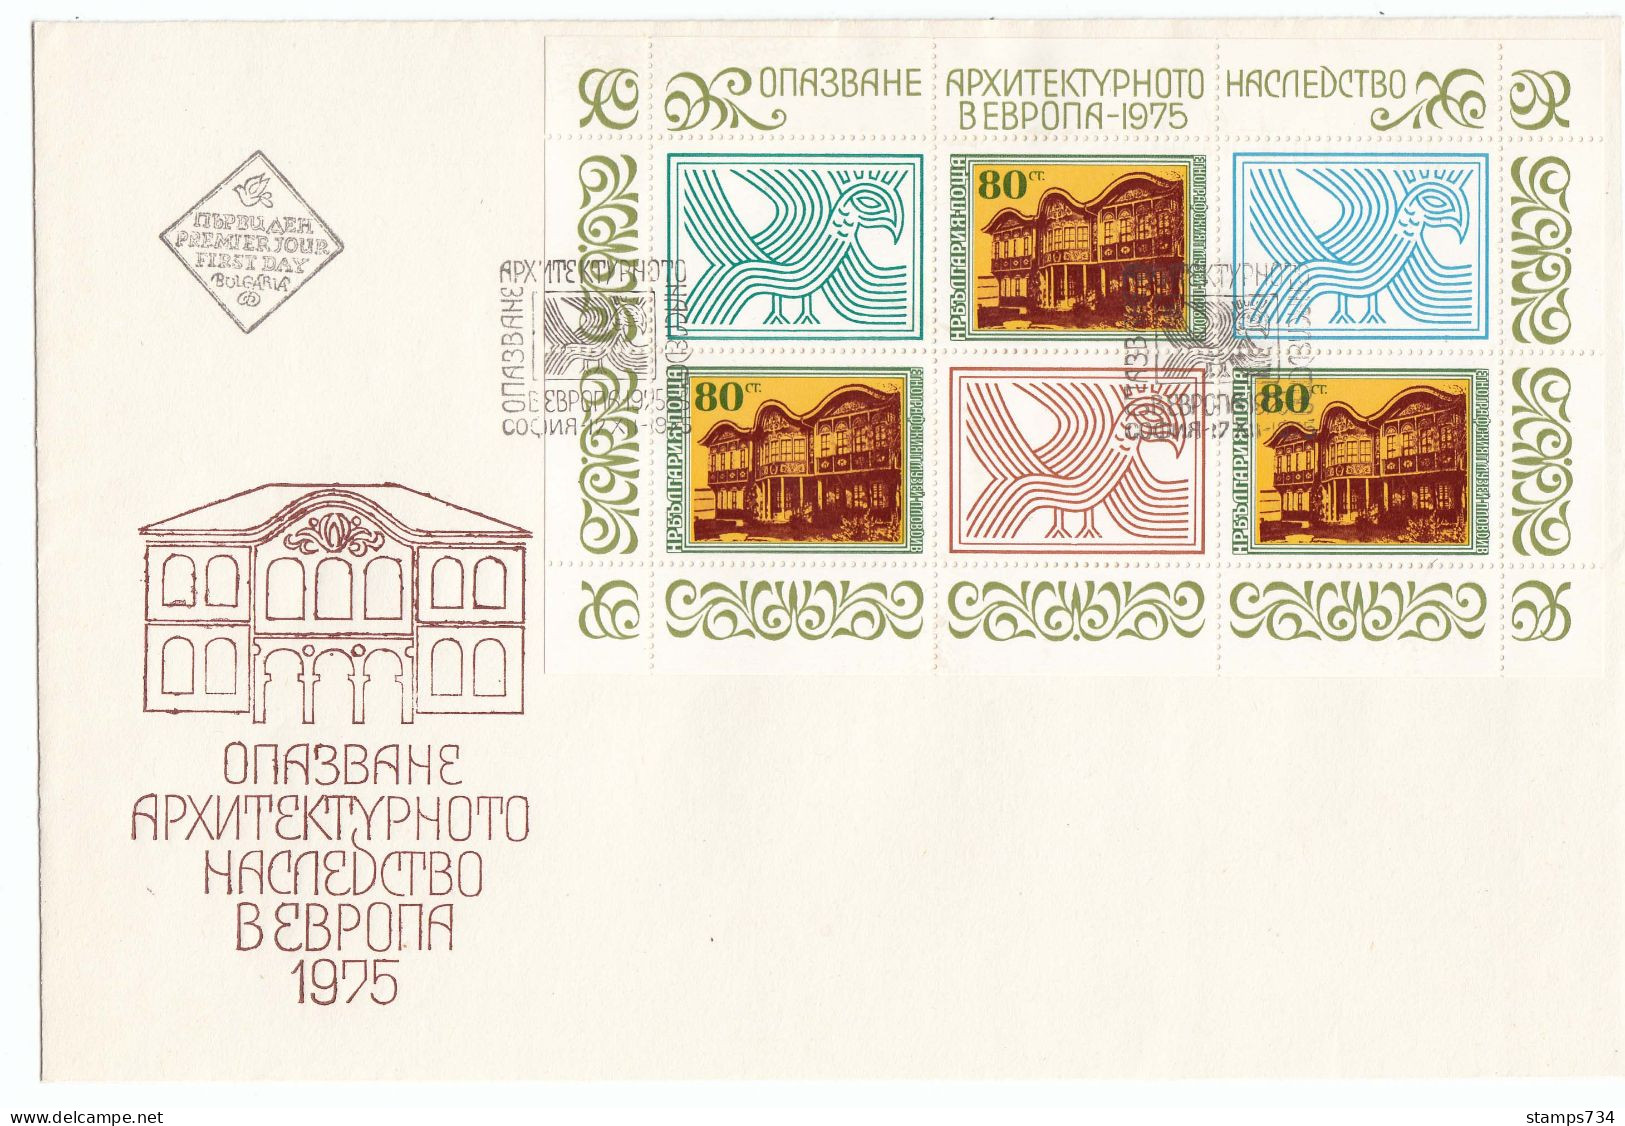 Bulgaria 1975 - European Heritage Year, Mi-Nr. 2456 In Sheet, FDC - FDC